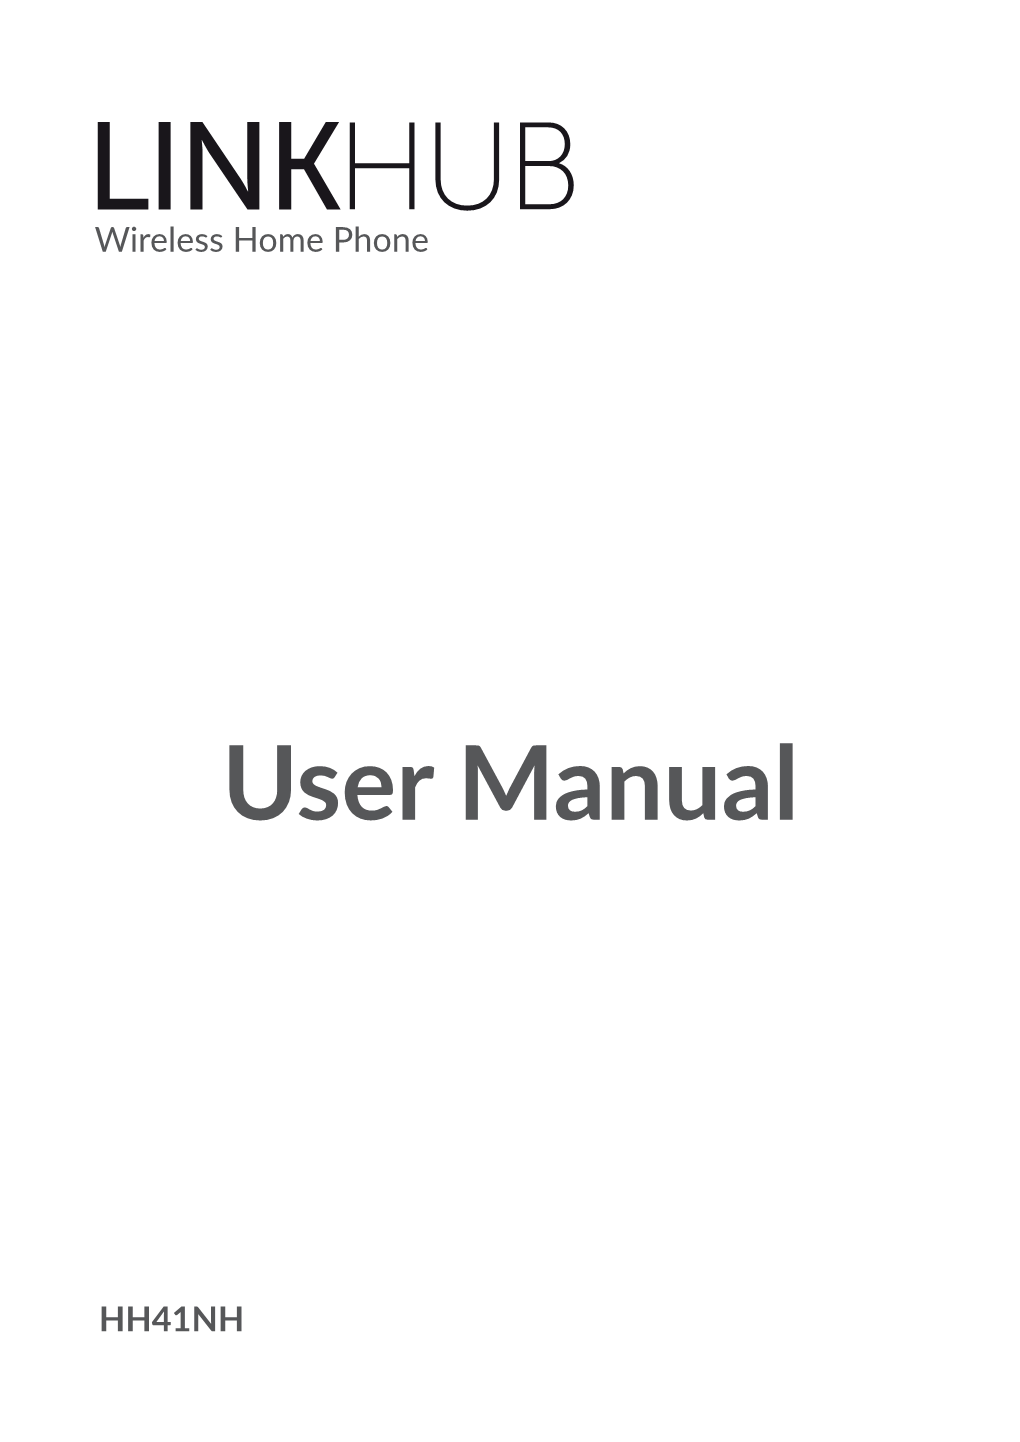 Alcatel LINKHUB User Manual English KOODO